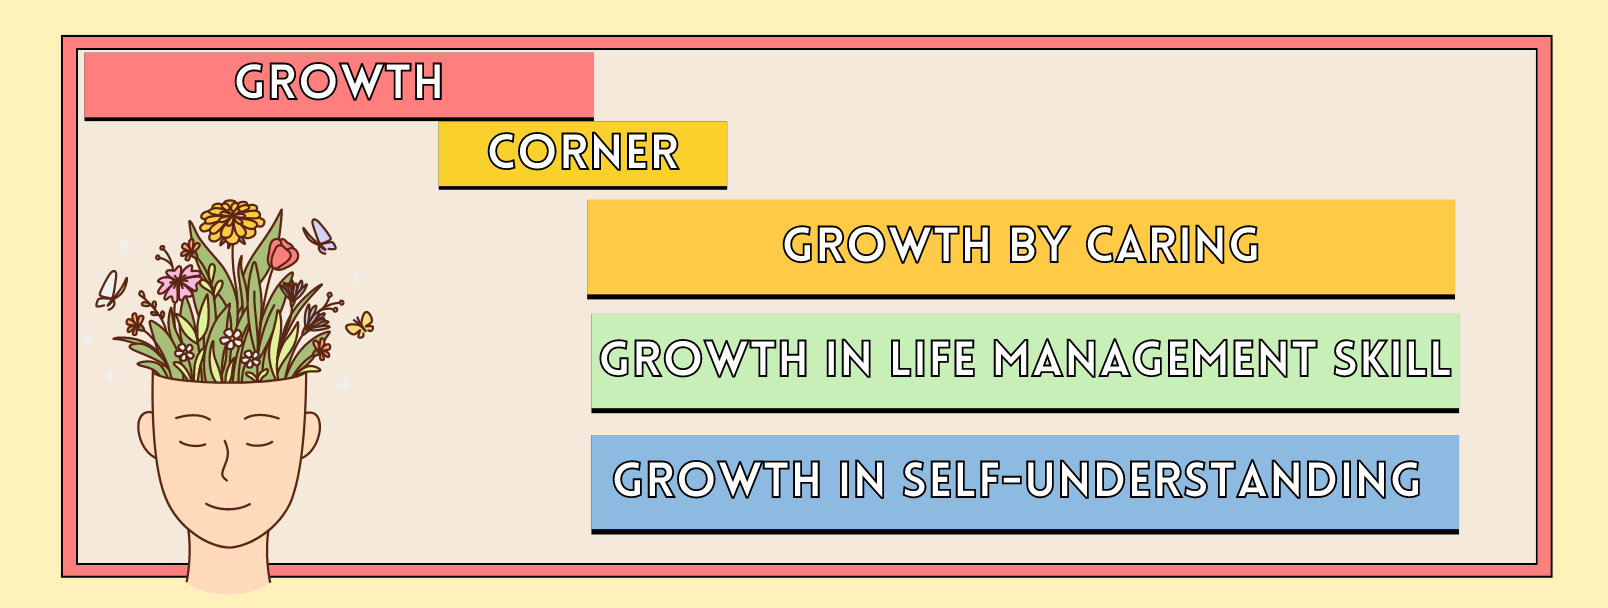 Growth corner2